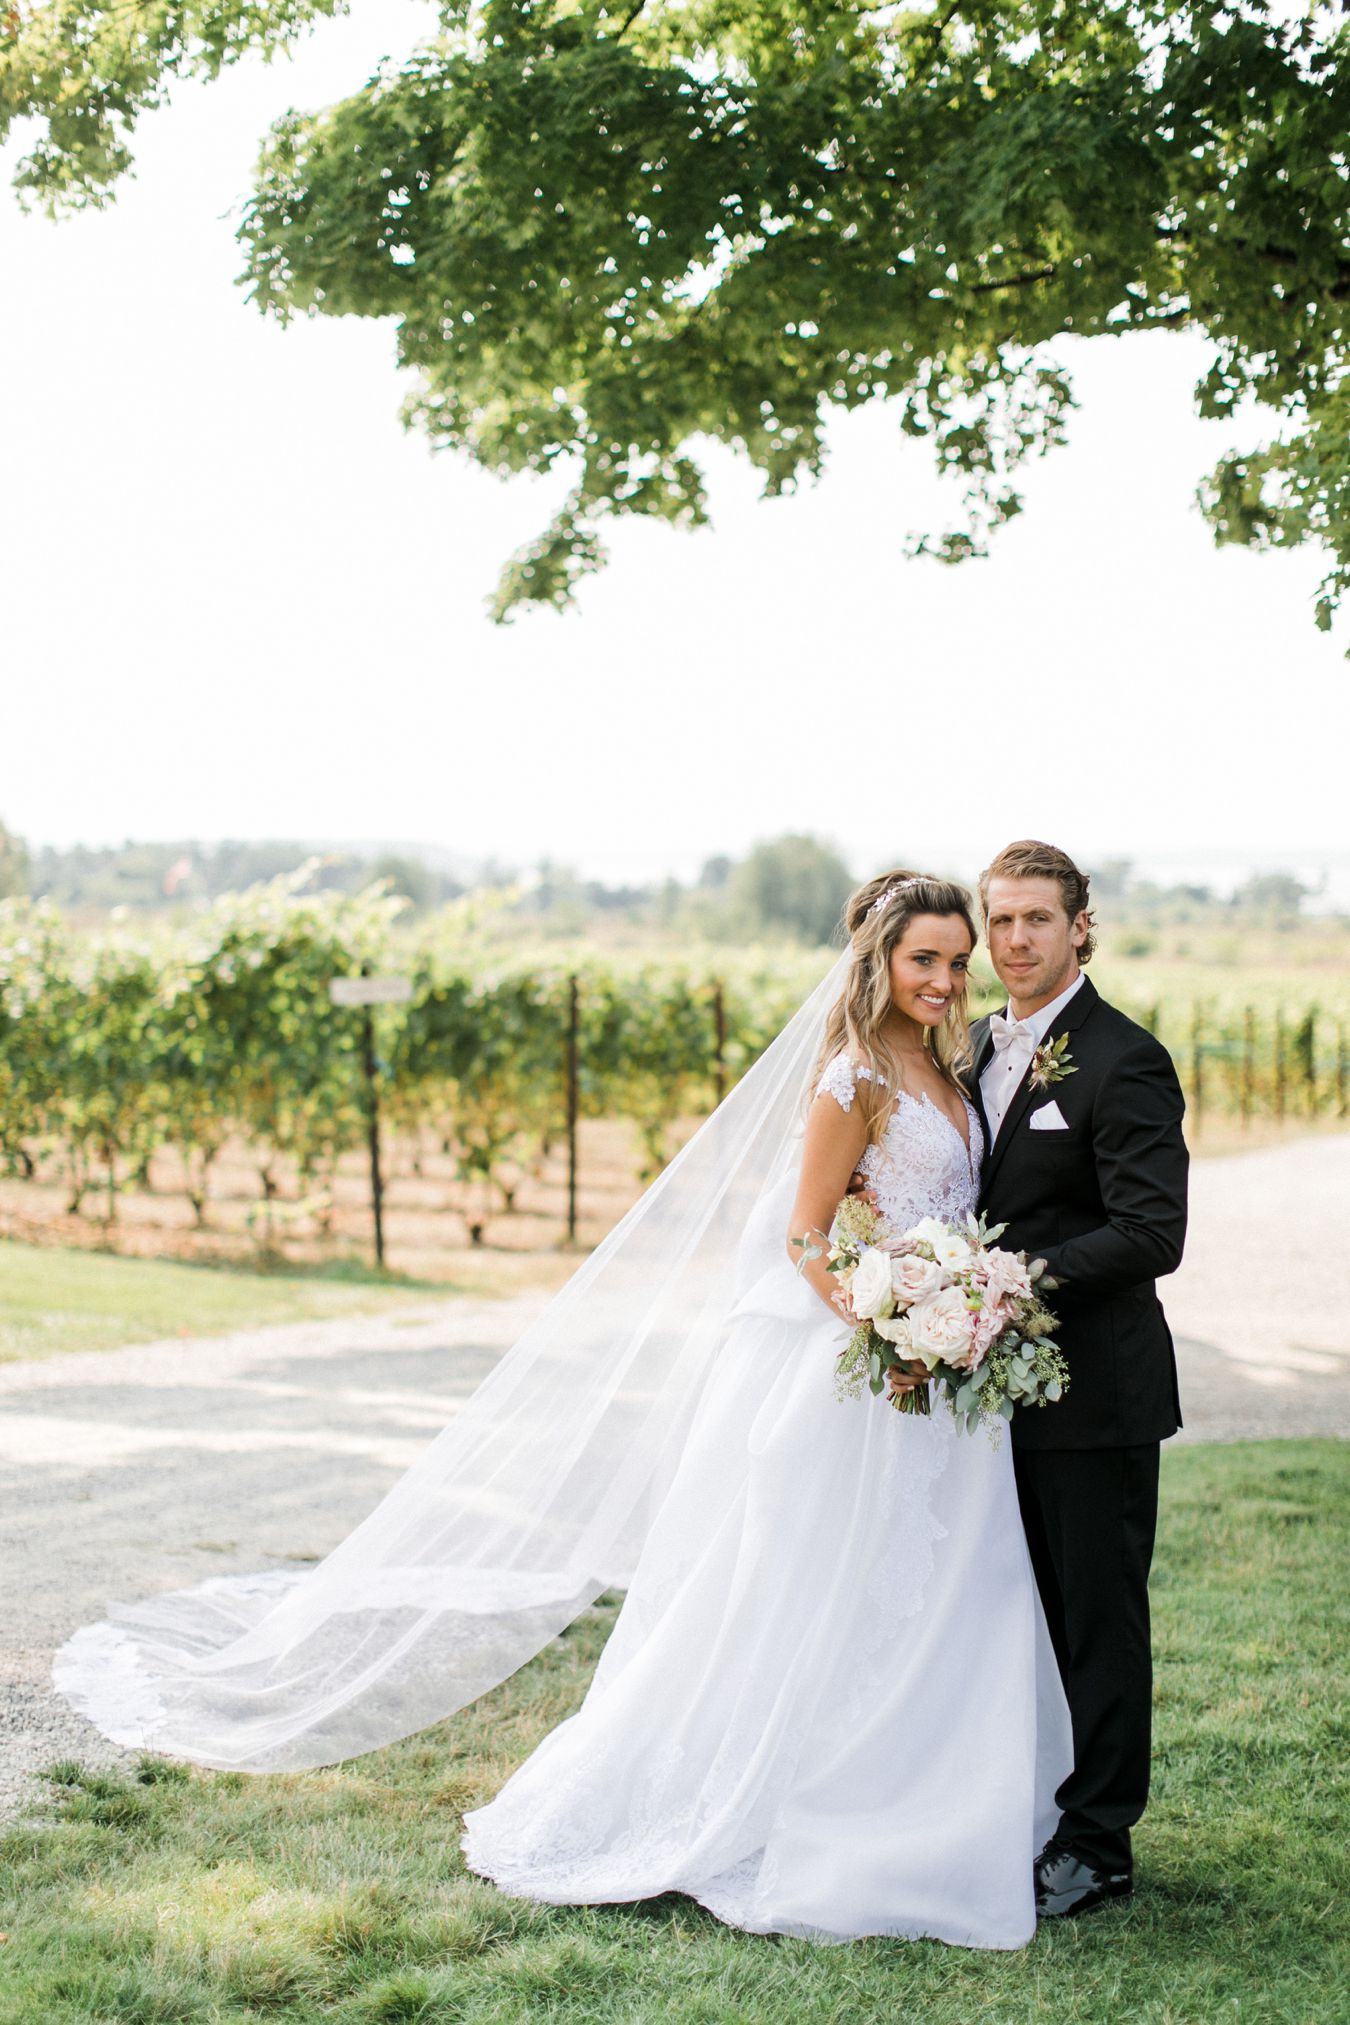 Traverse City Vineyards Wedding Photographer | Cory Weber Photography